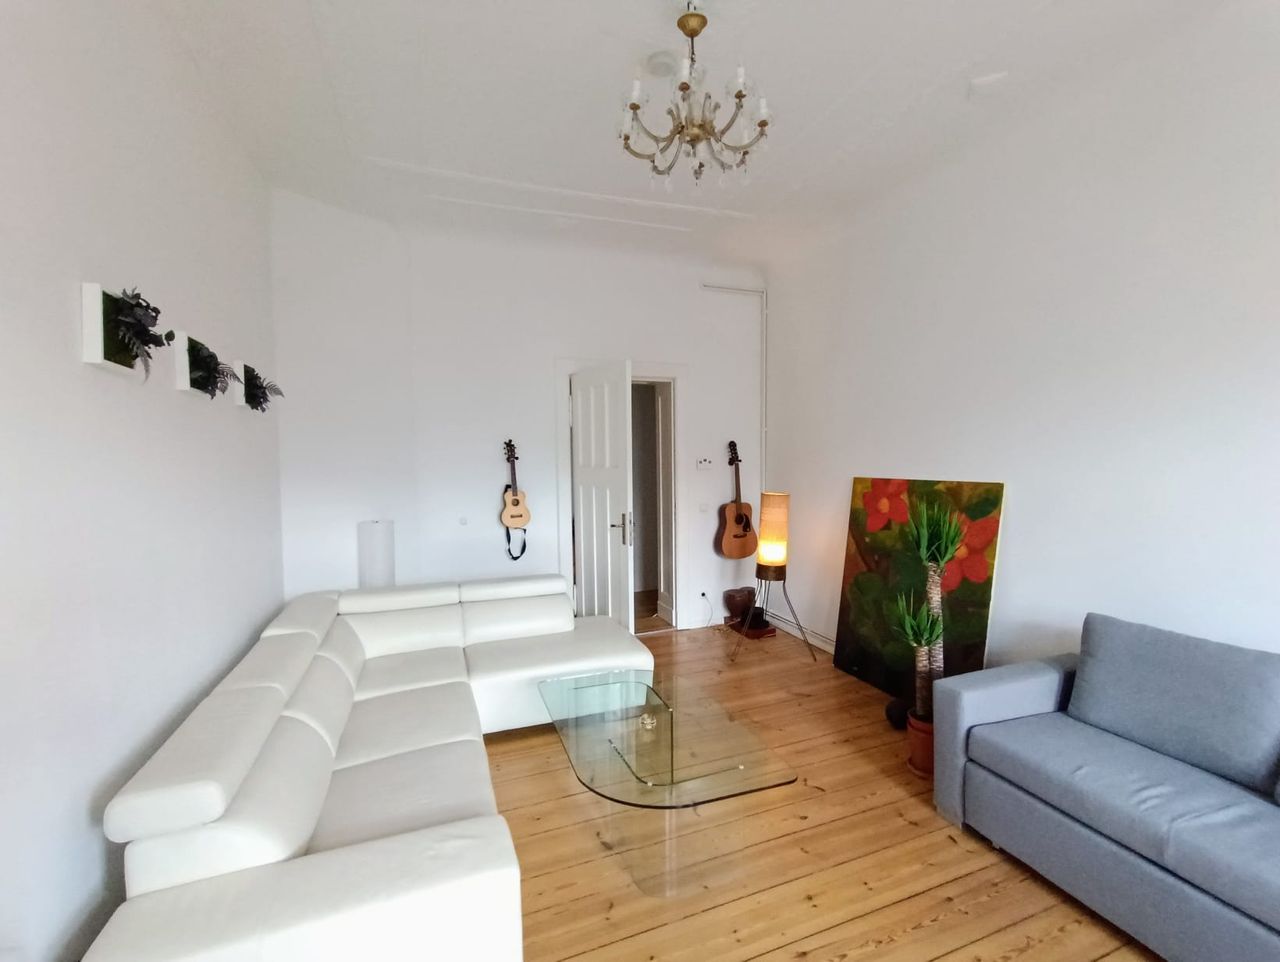 Premium flat with stylish furnishing in top area (Prenzlauer Berg)